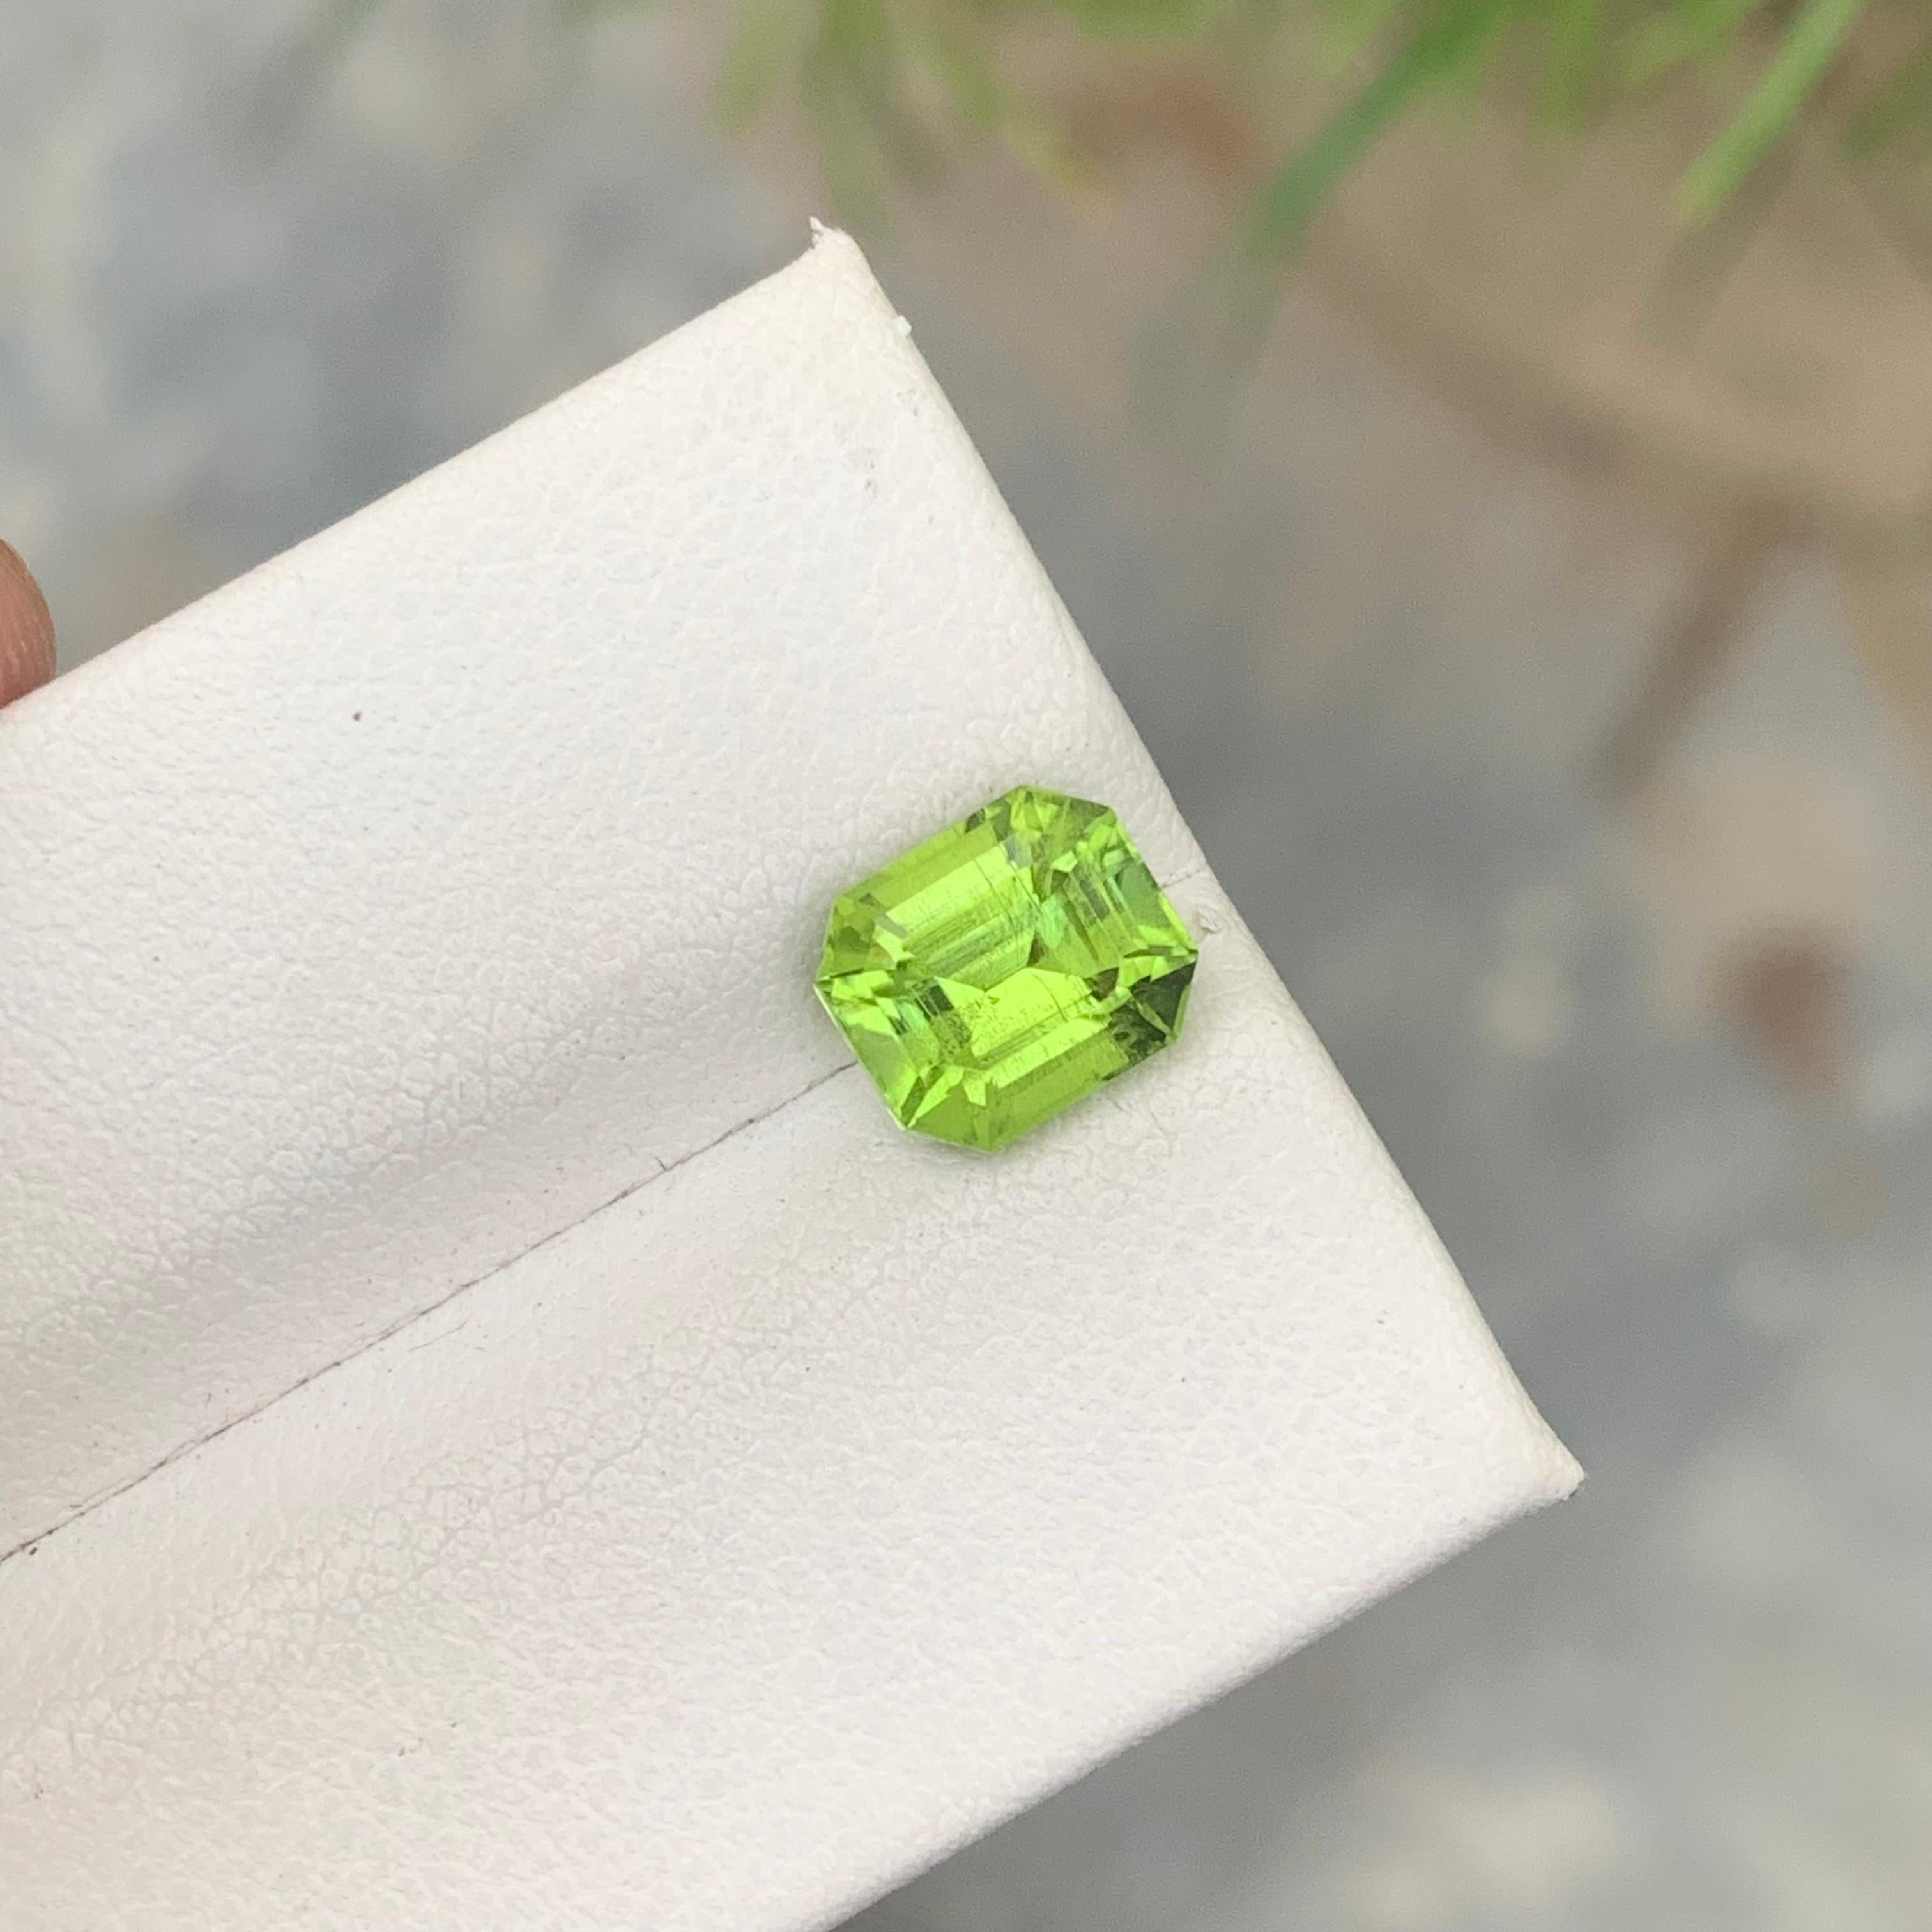 SI Clarity 2.15 Carat Natural Emerald Cut Green Peridot Gemstone Pakistan Mine For Sale 6